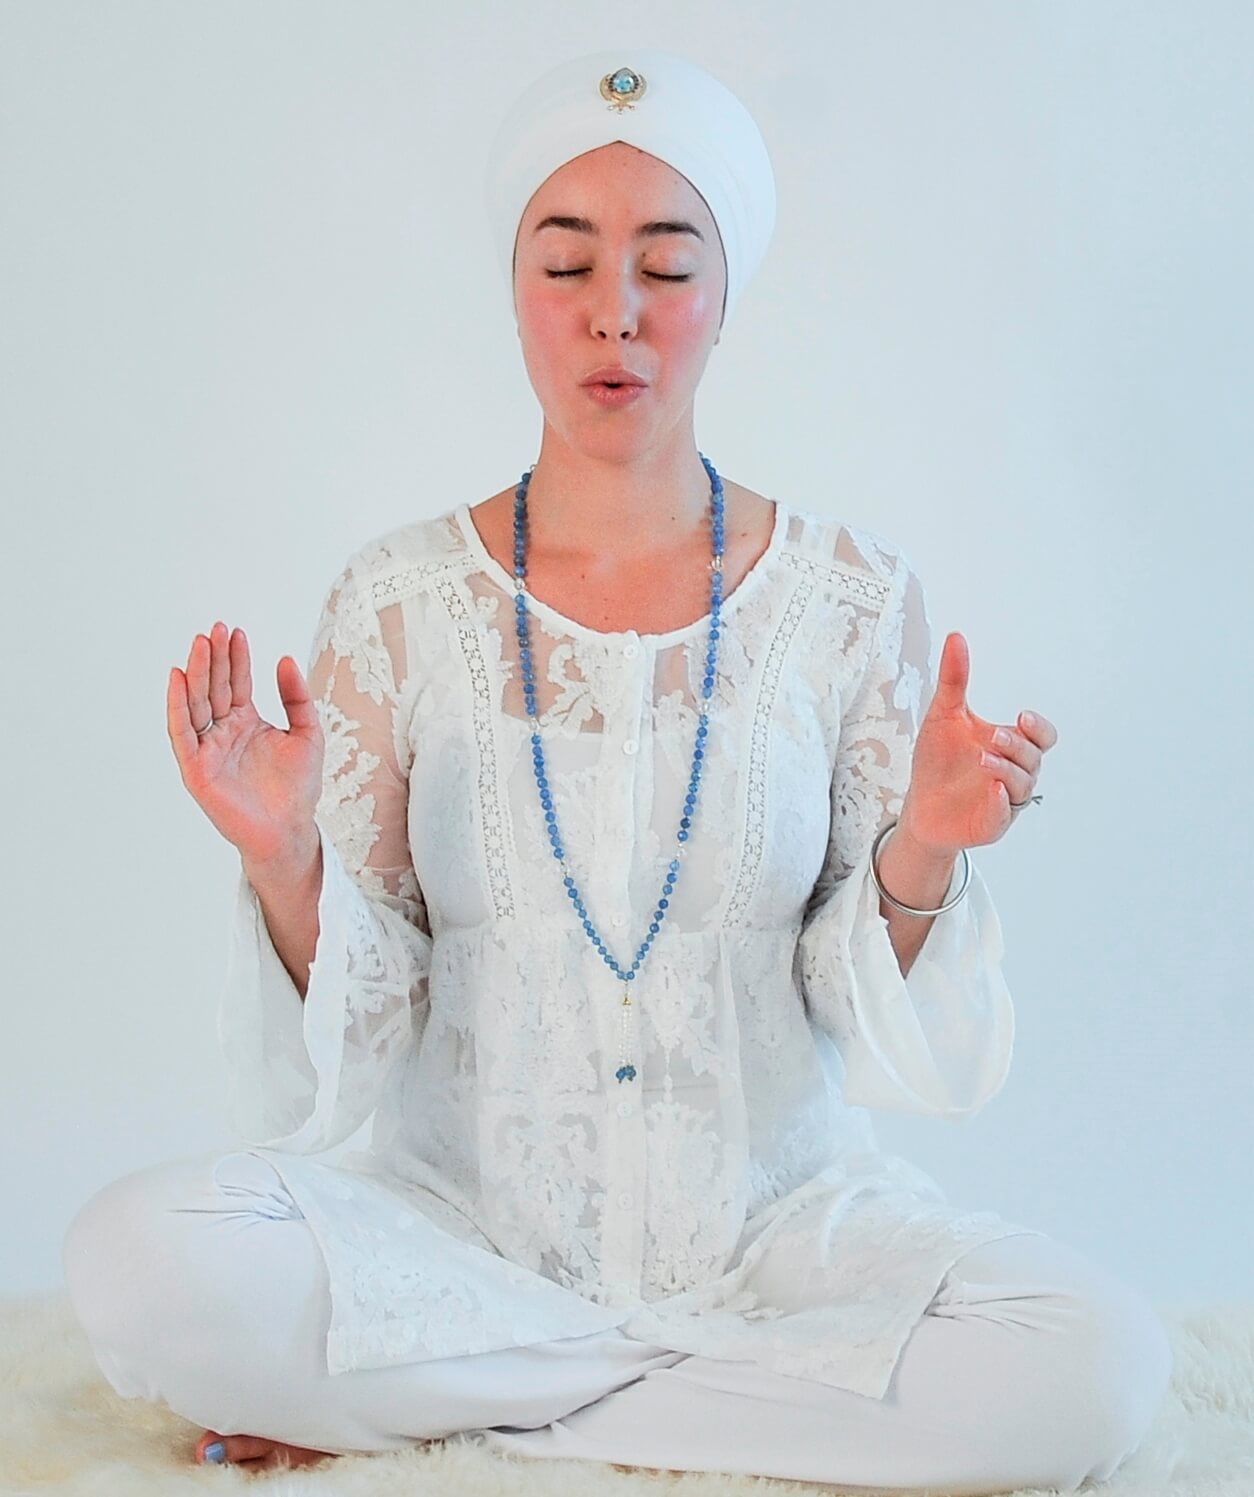 Meditation to Strengthen the Nervous System